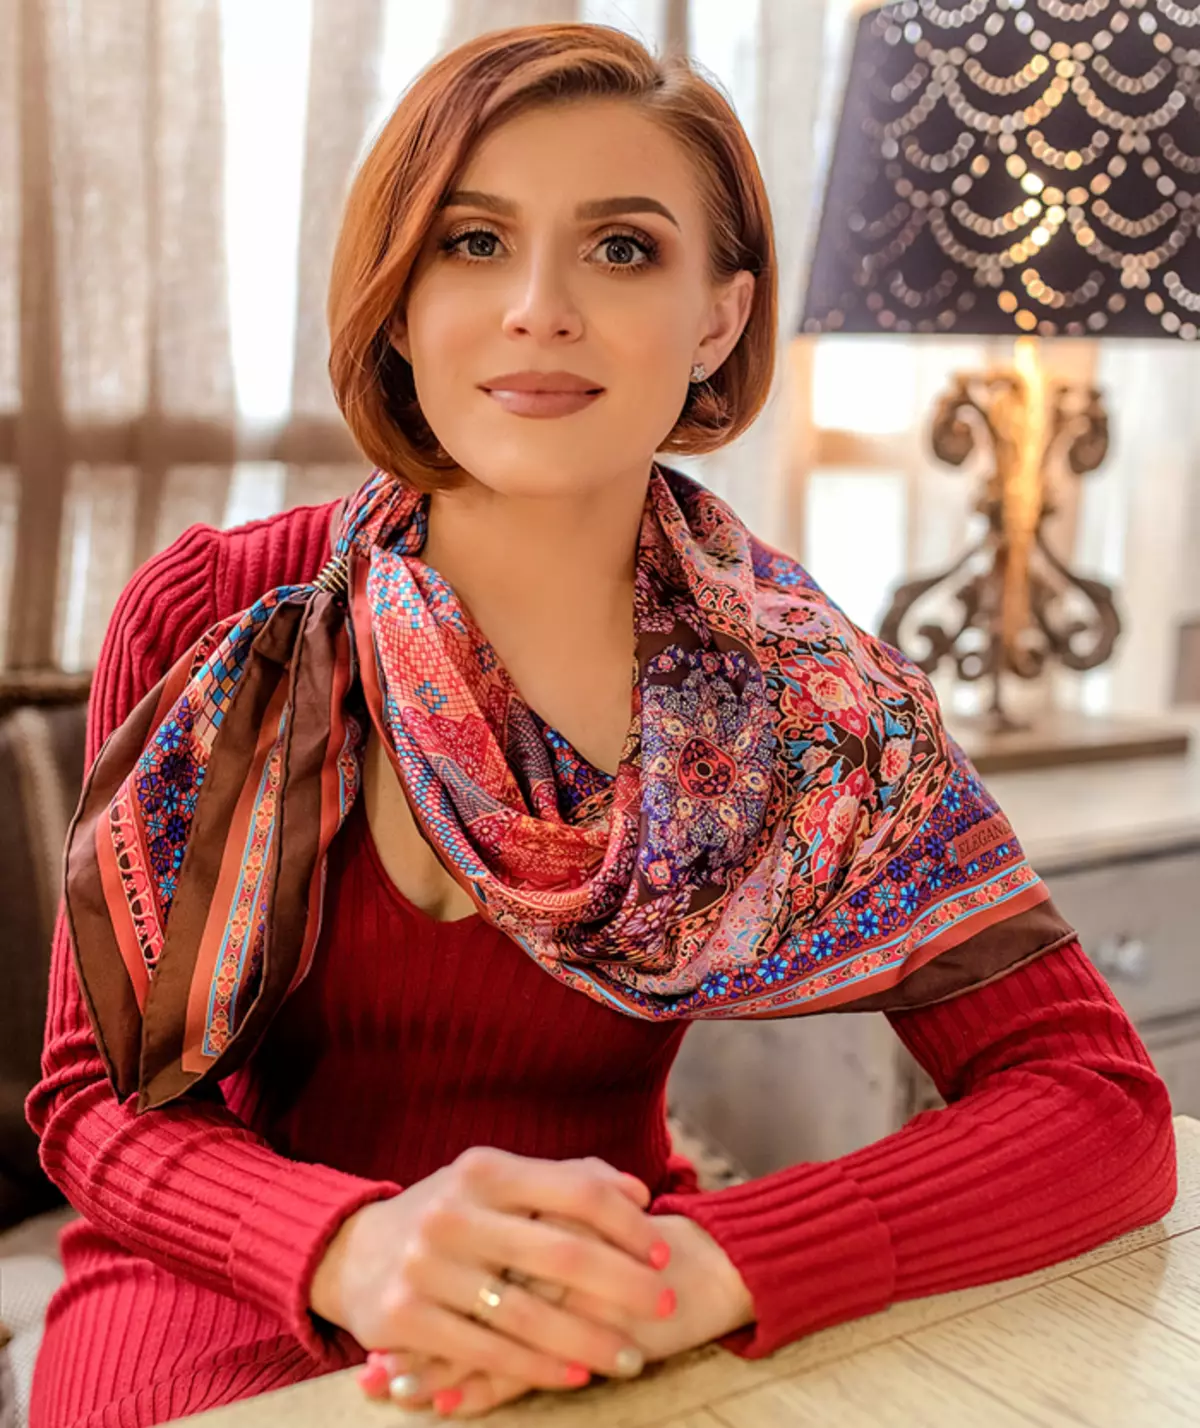 Evgenia Ghanev.